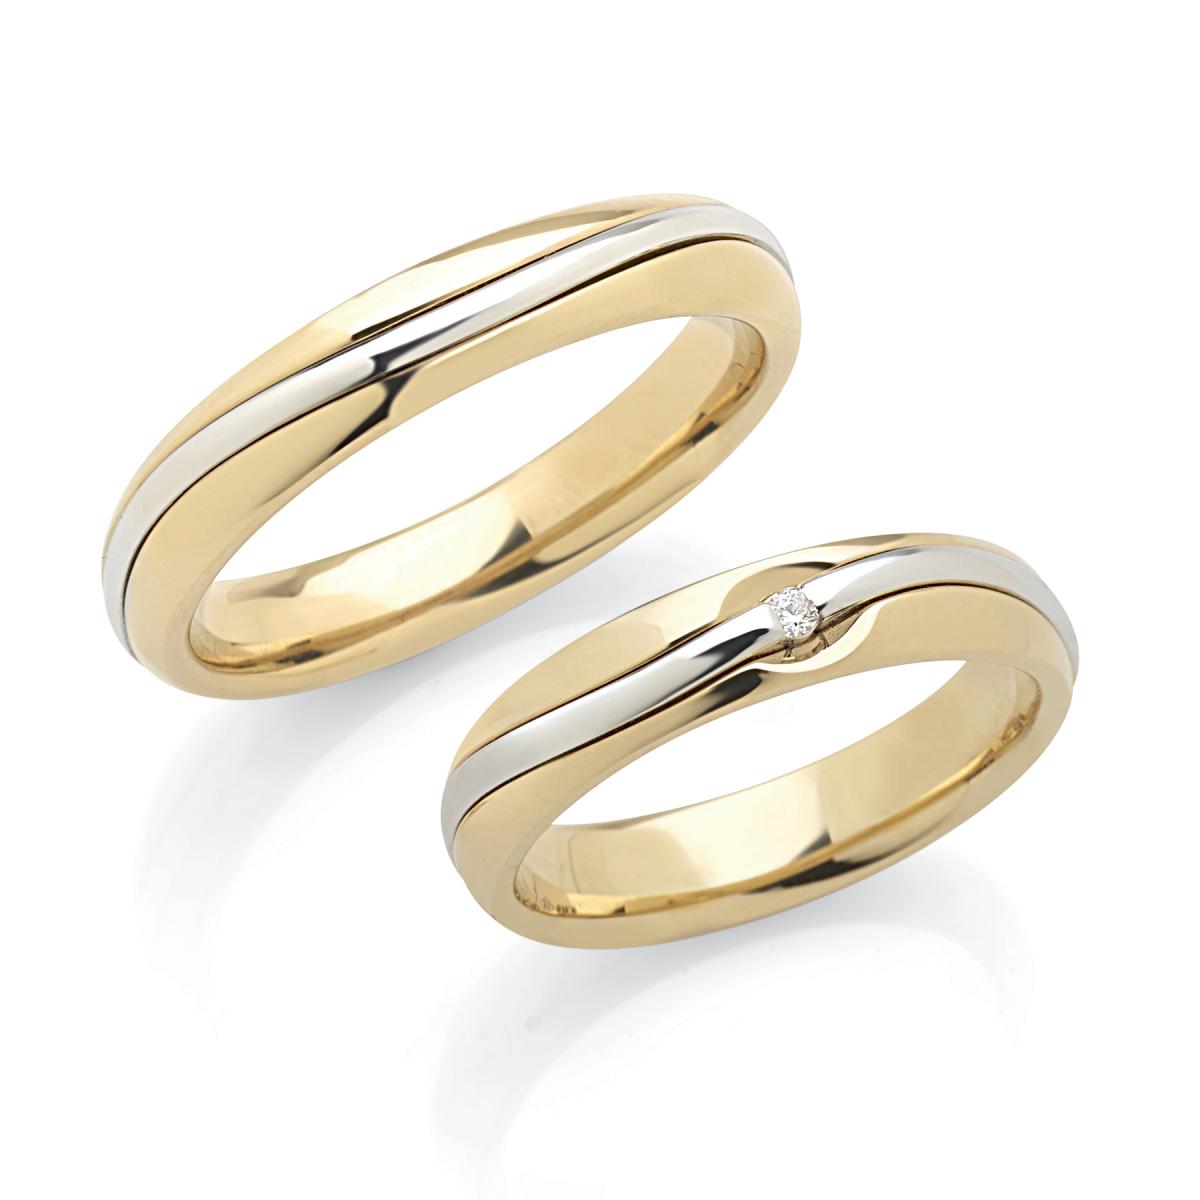 4.5 mm wide 18kt gold wedding ring - 557